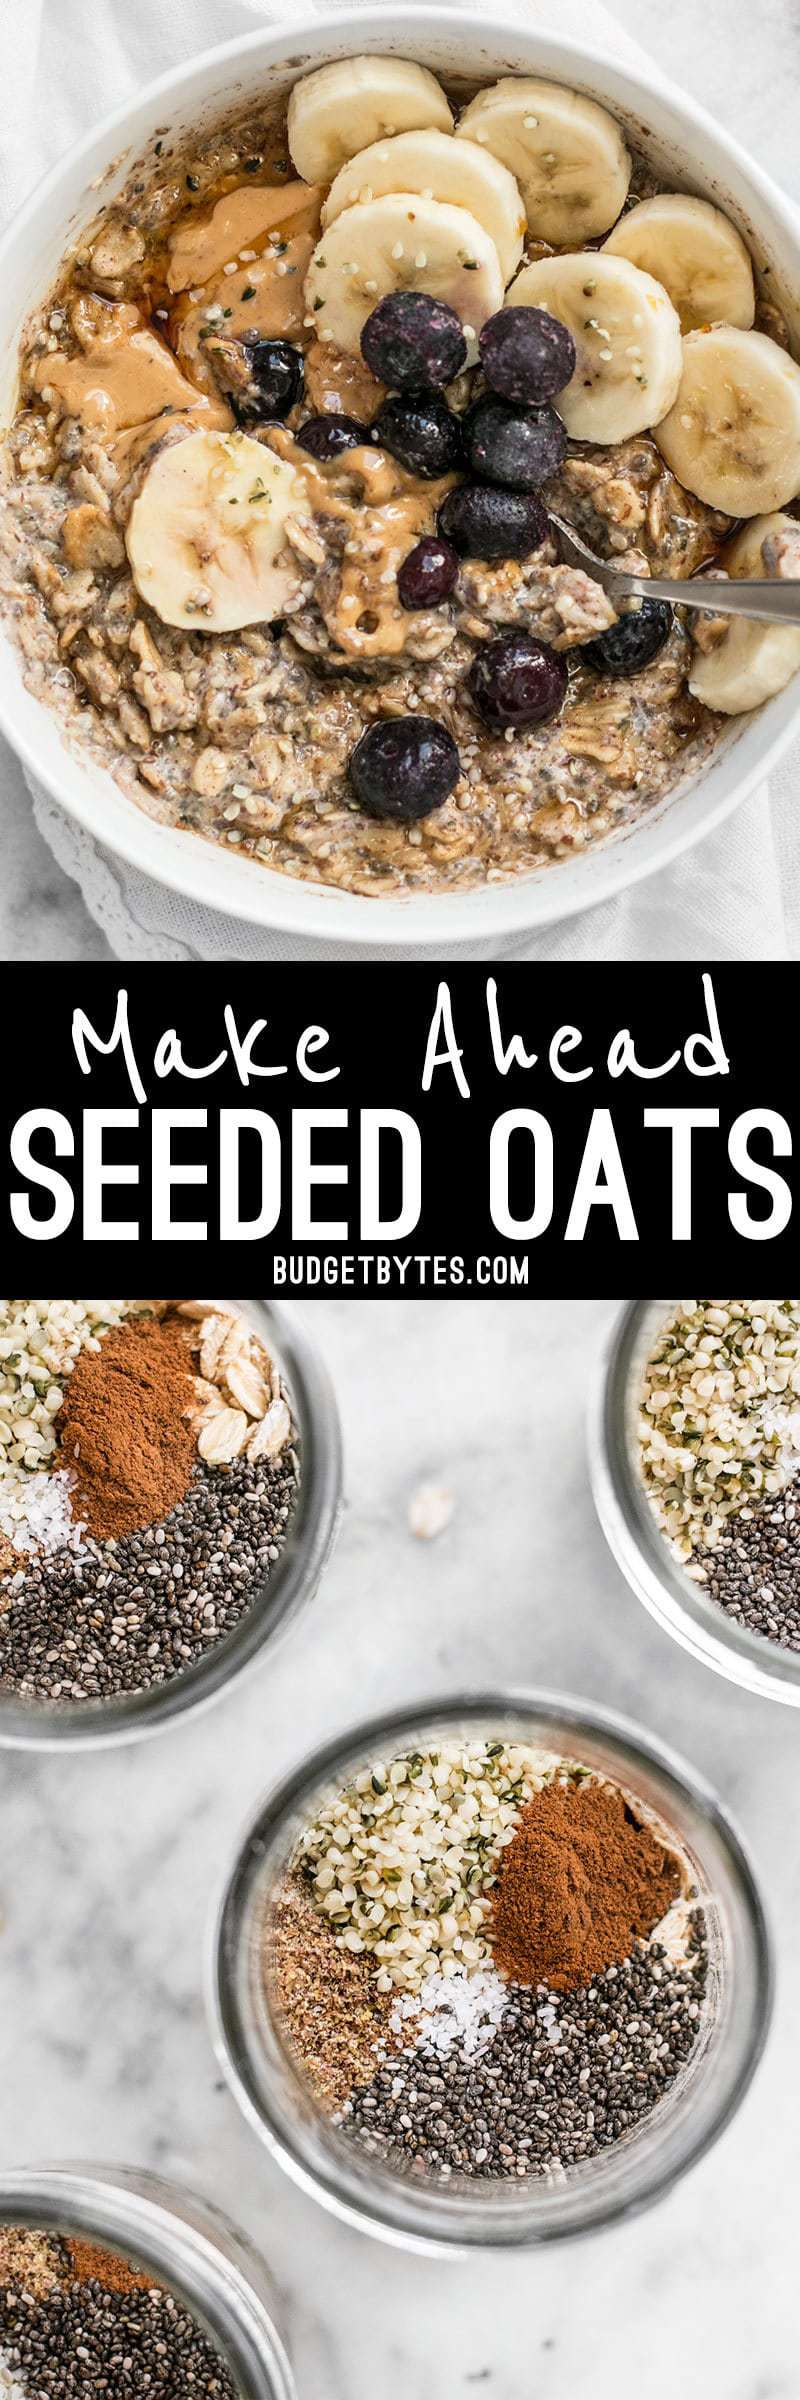 Make Ahead Seeded Oats - Breakfast Meal Prep - Budget Bytes